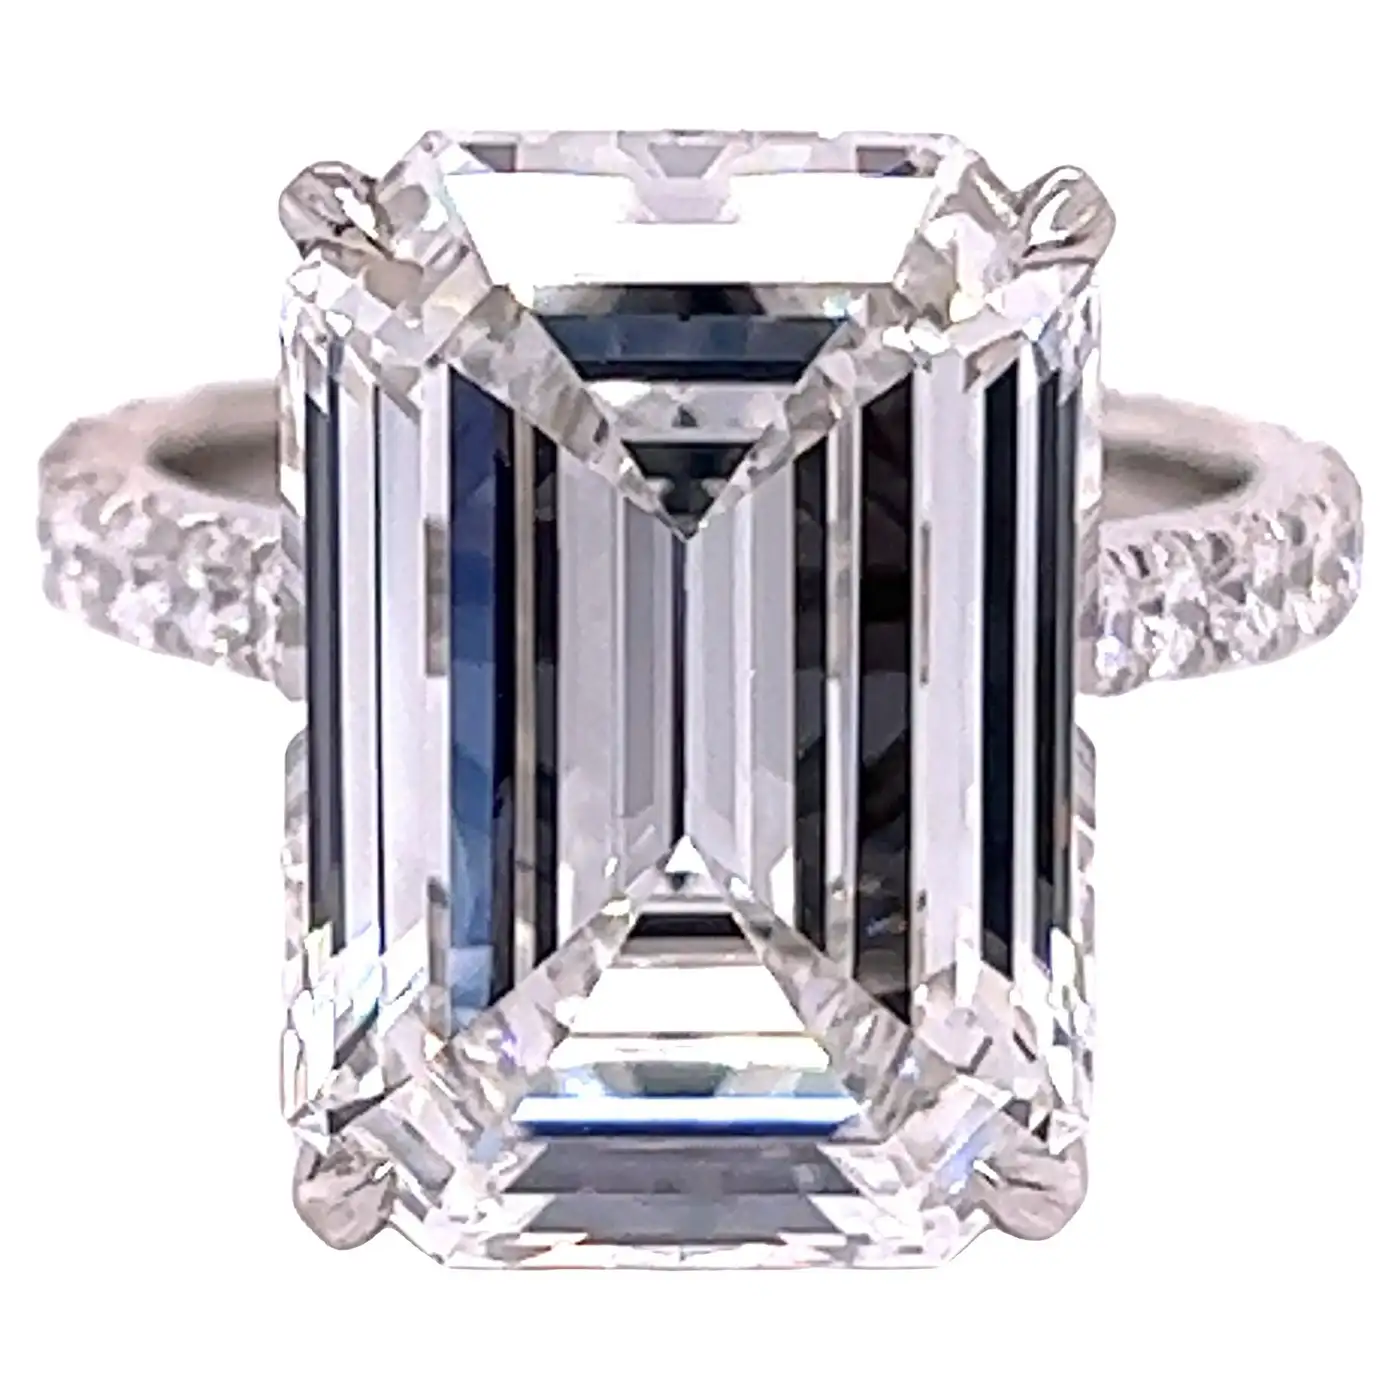 David-Rosenberg-10.41-Carat-Emerald-Cut-F-VVS2-GIA-Diamond-Engagement-Ring-1.webp